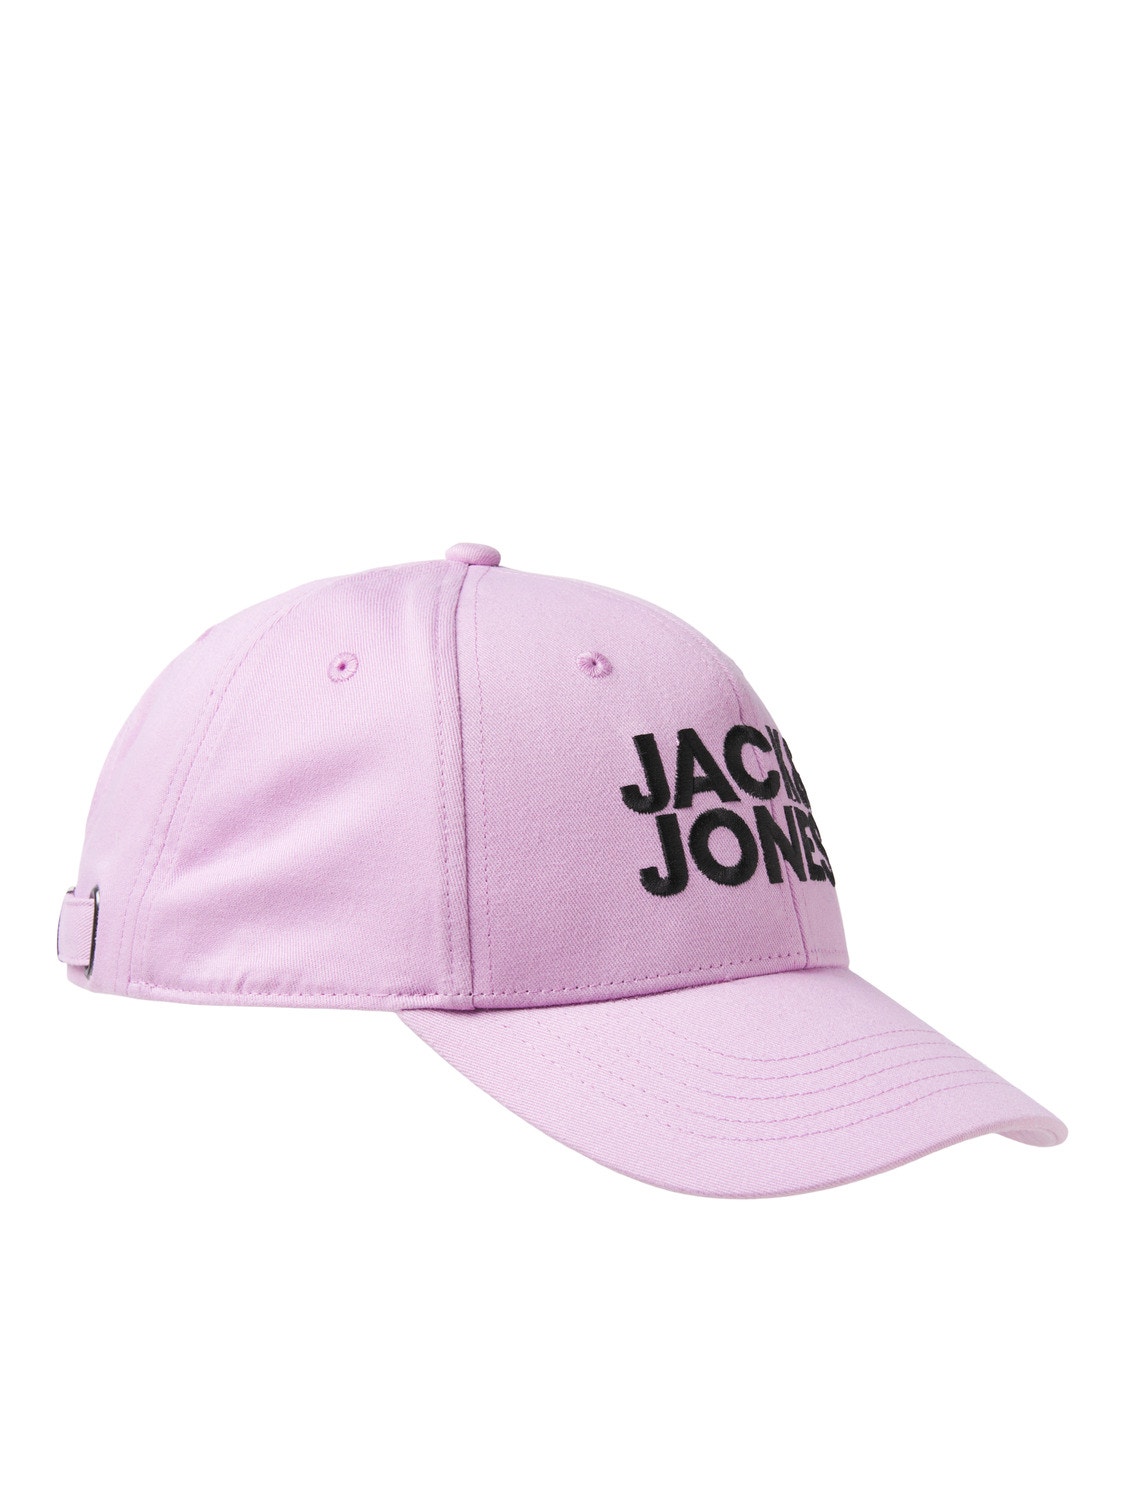 Jack & Jones Casquette baseball -Purple Rose - 12254296